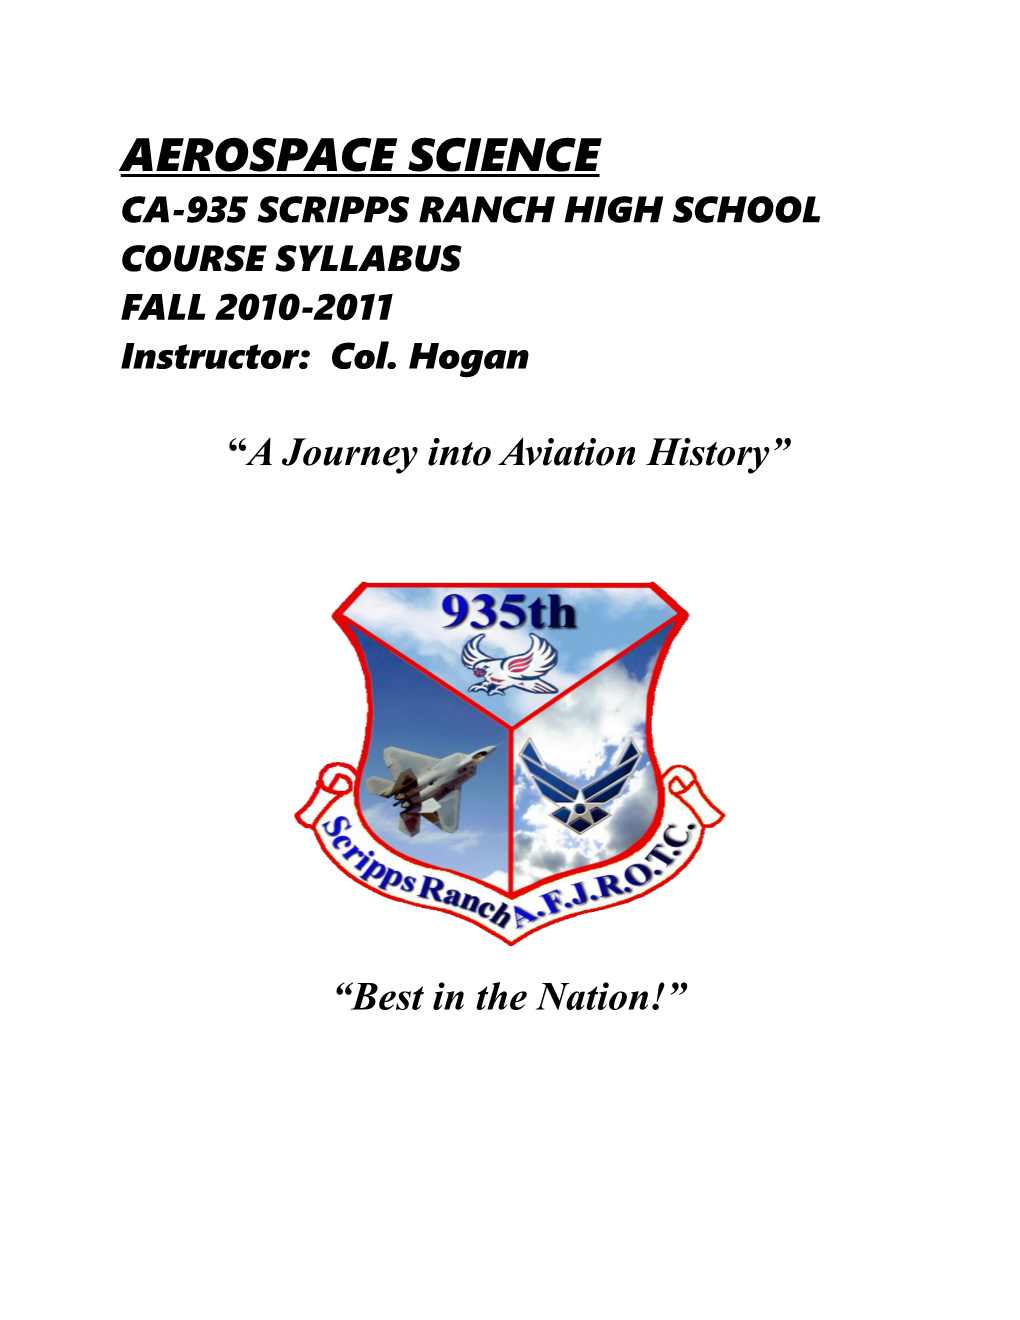 Ca-935 Scripps Ranch High School